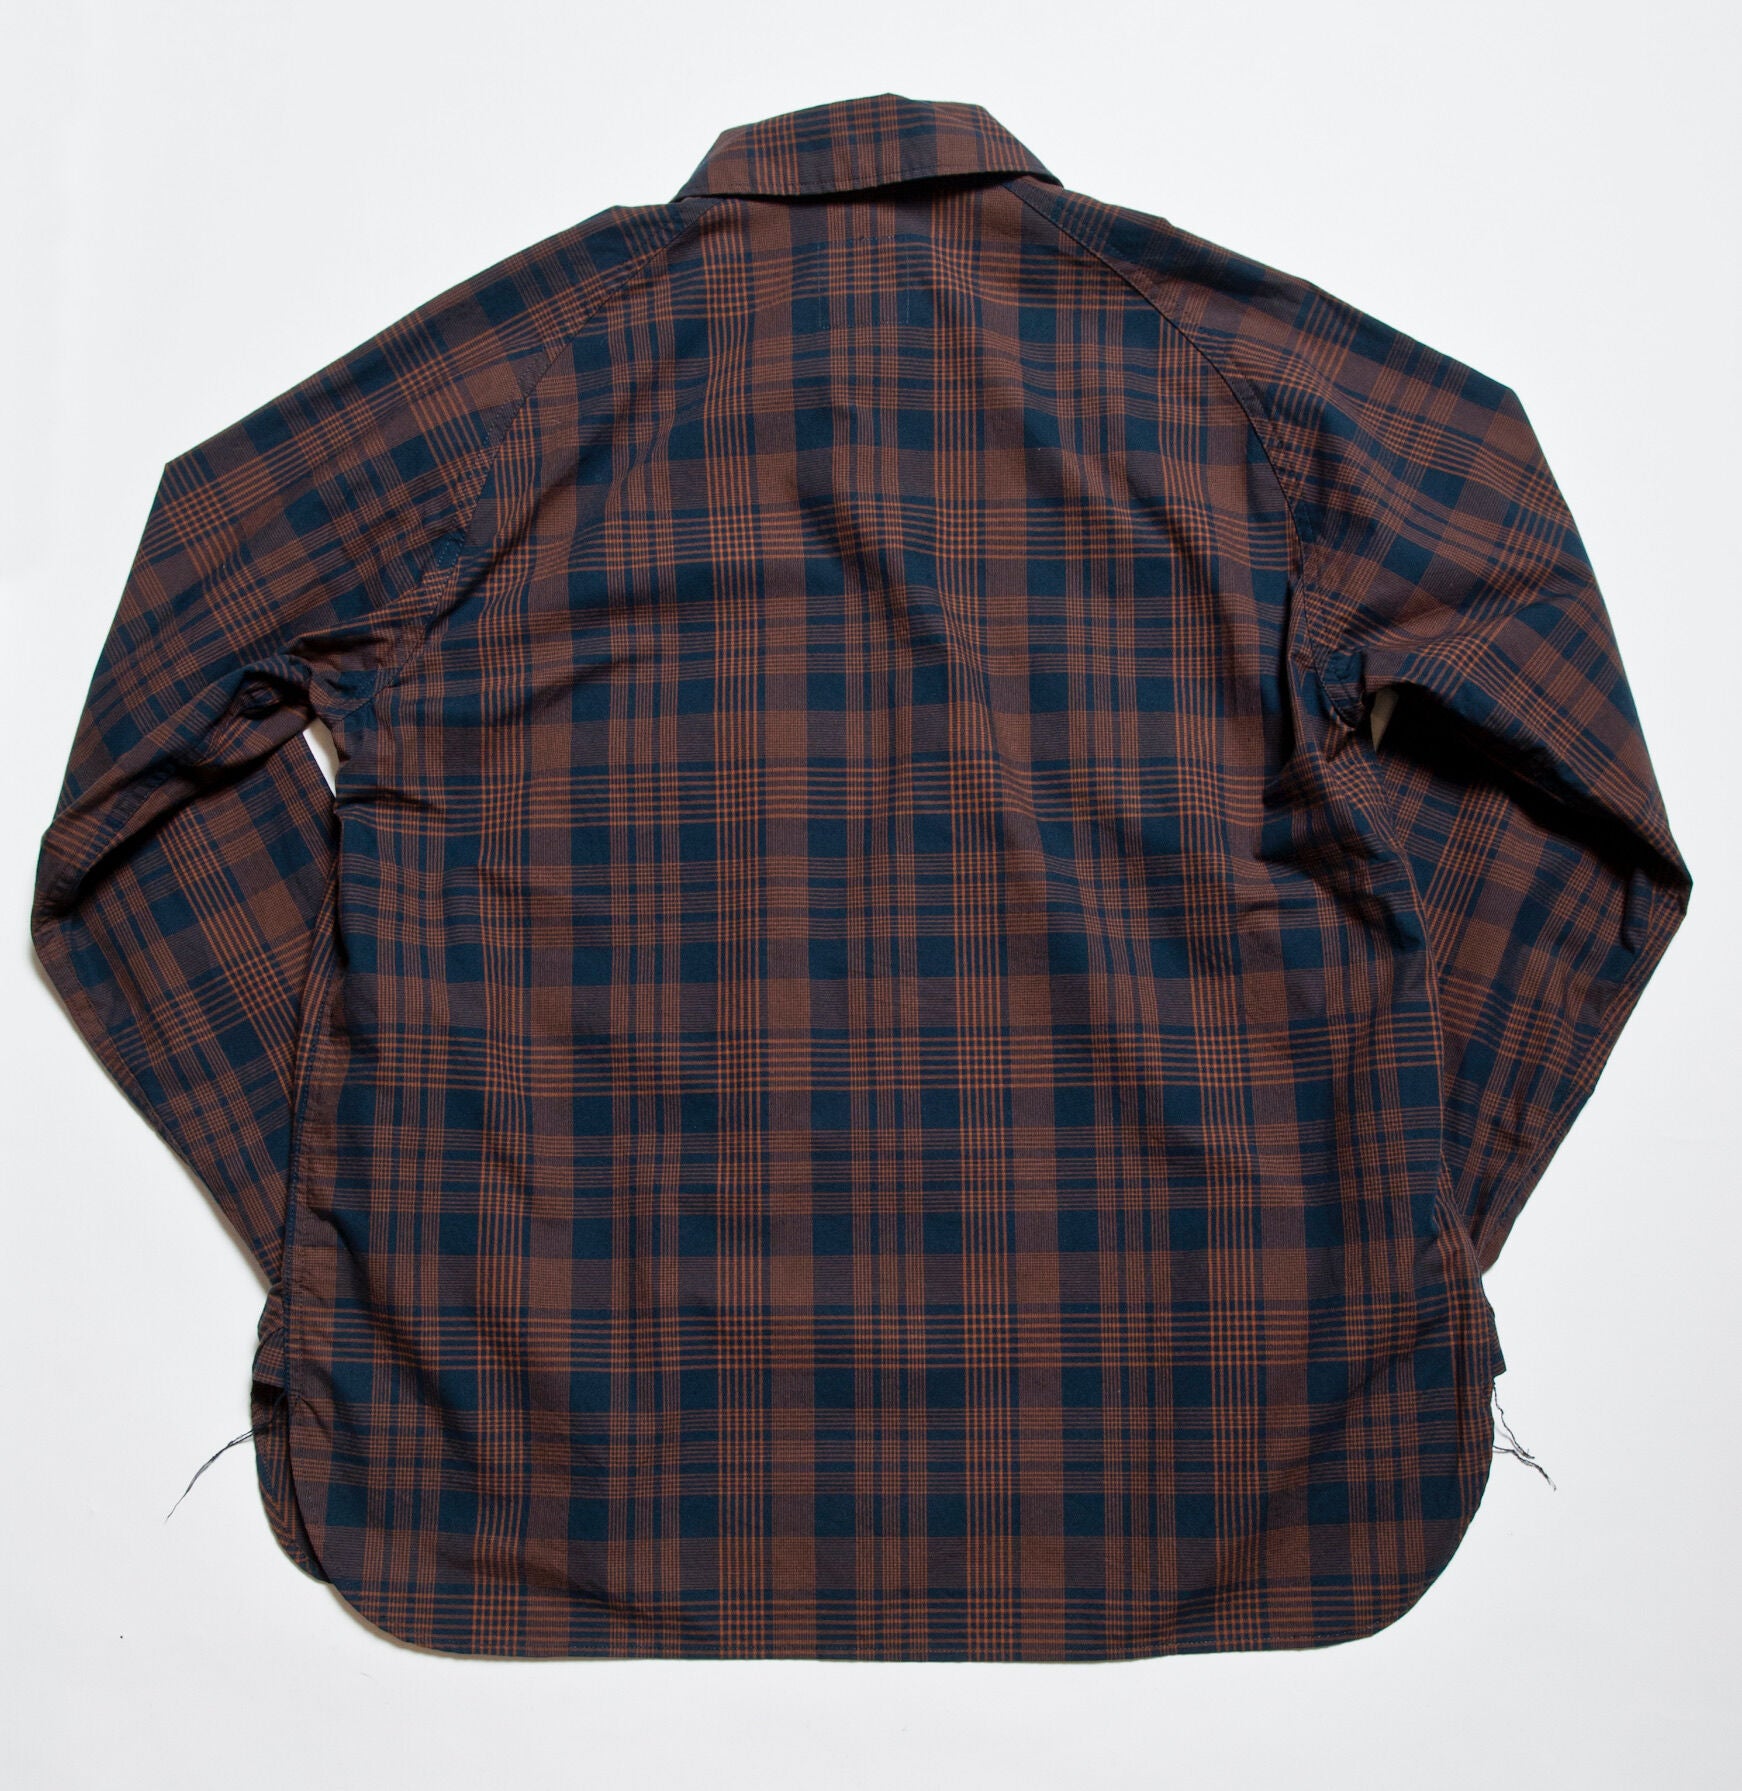 "Jackson" High Density Cotton Anorak Shirt in Navy x Brown